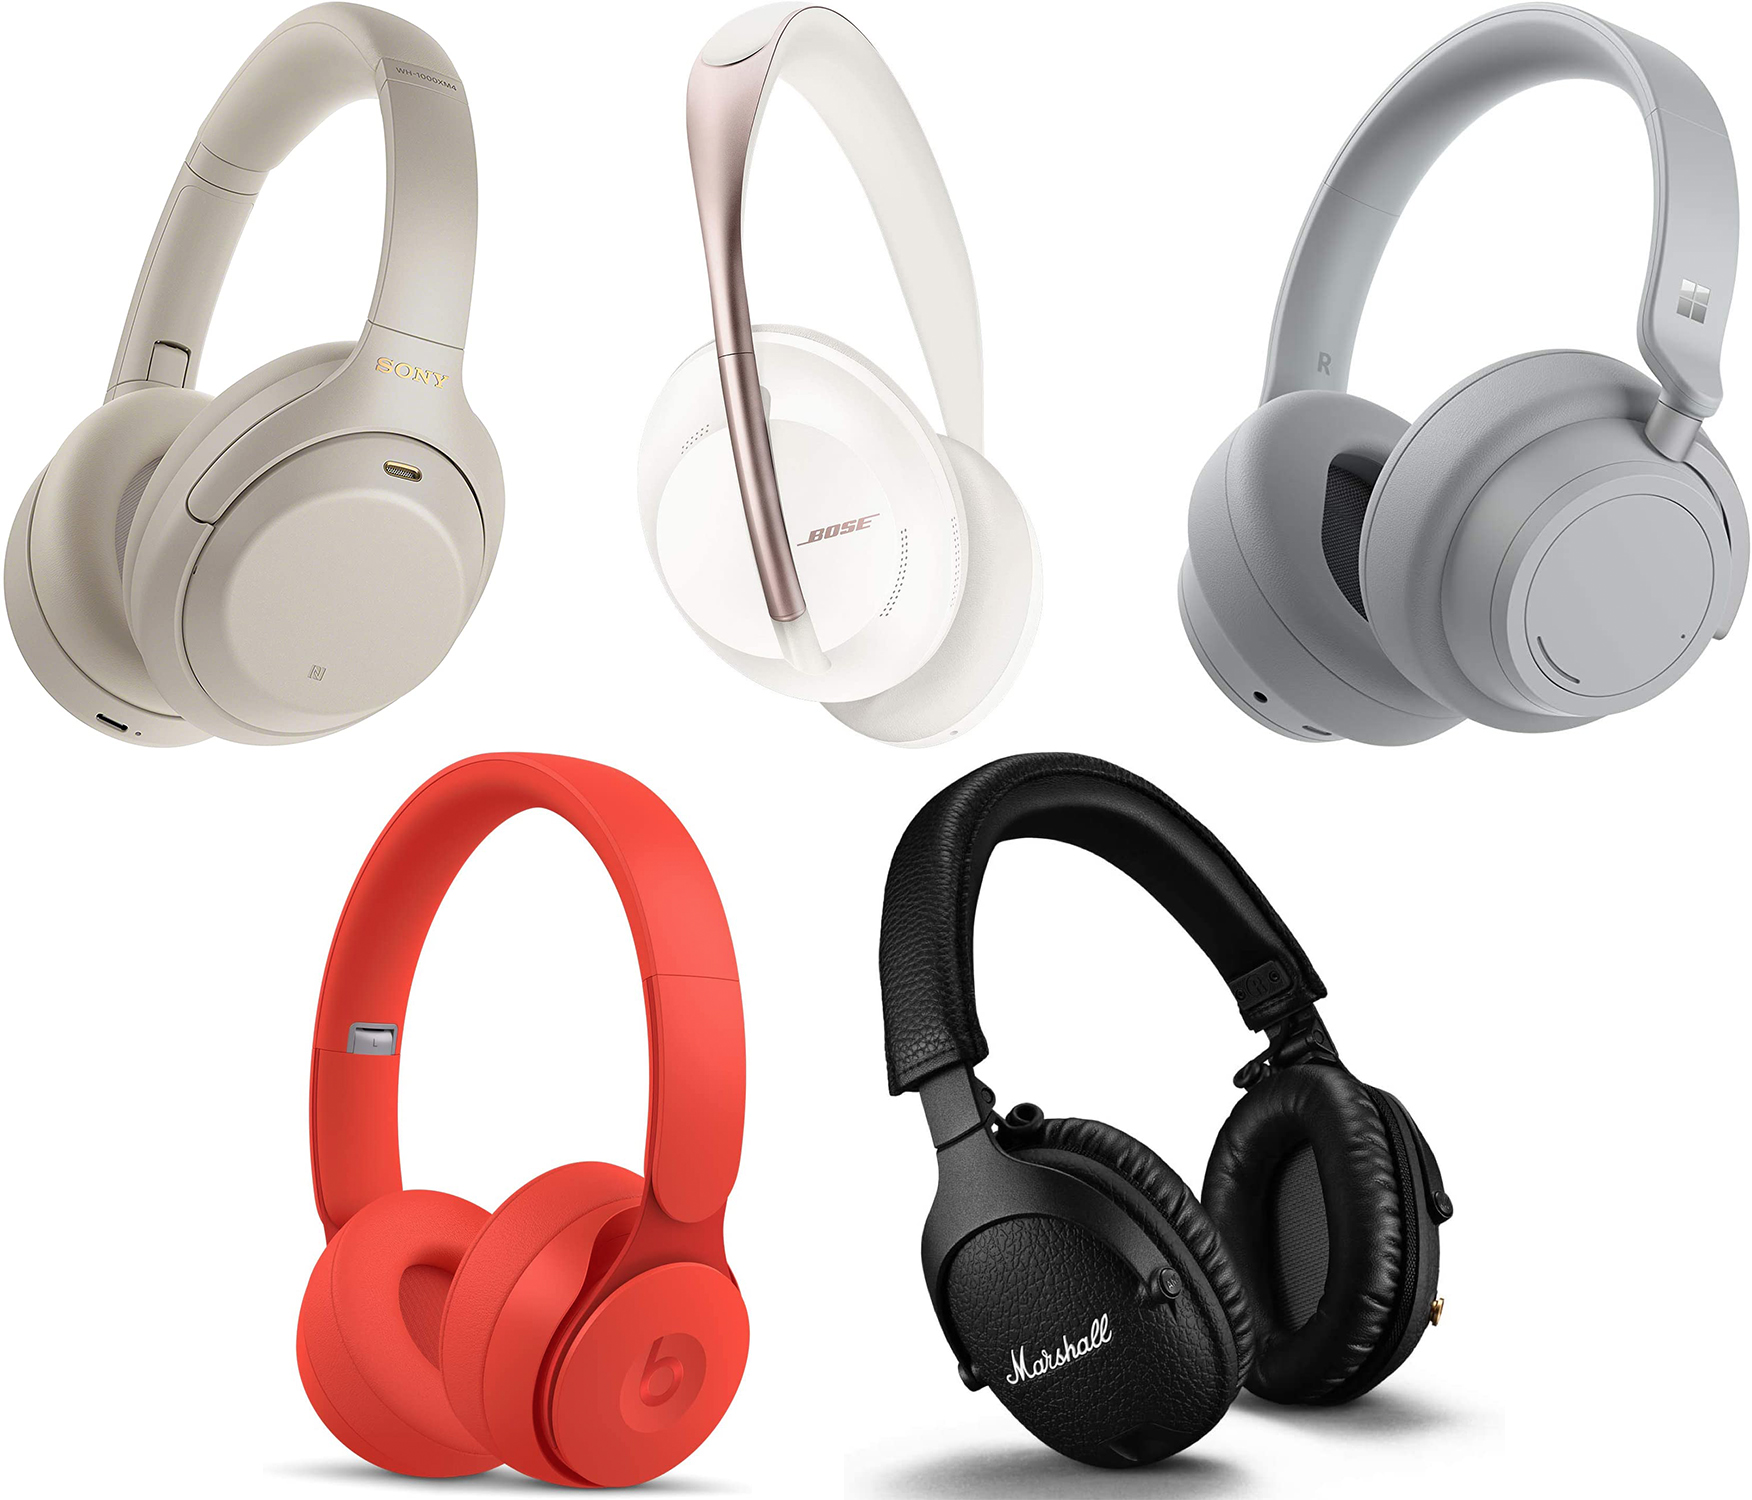 Top 5 wireless noise cancelling headphones 2020